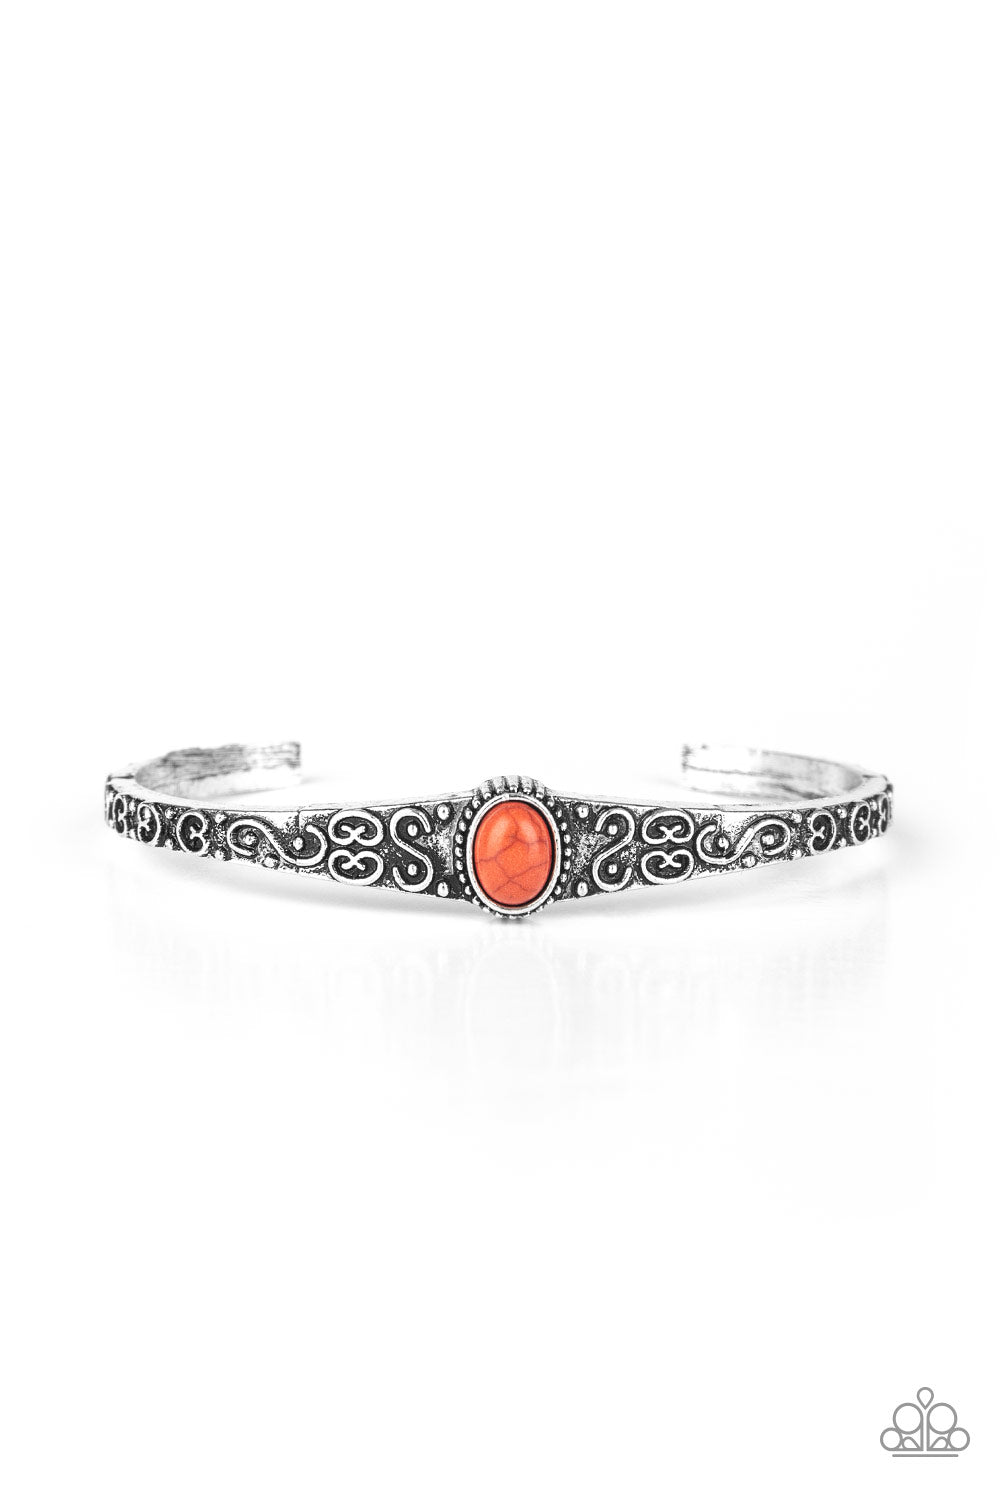 Make Your Own Path - Orange Stone Cuff Bracelet - Princess Glam Shop